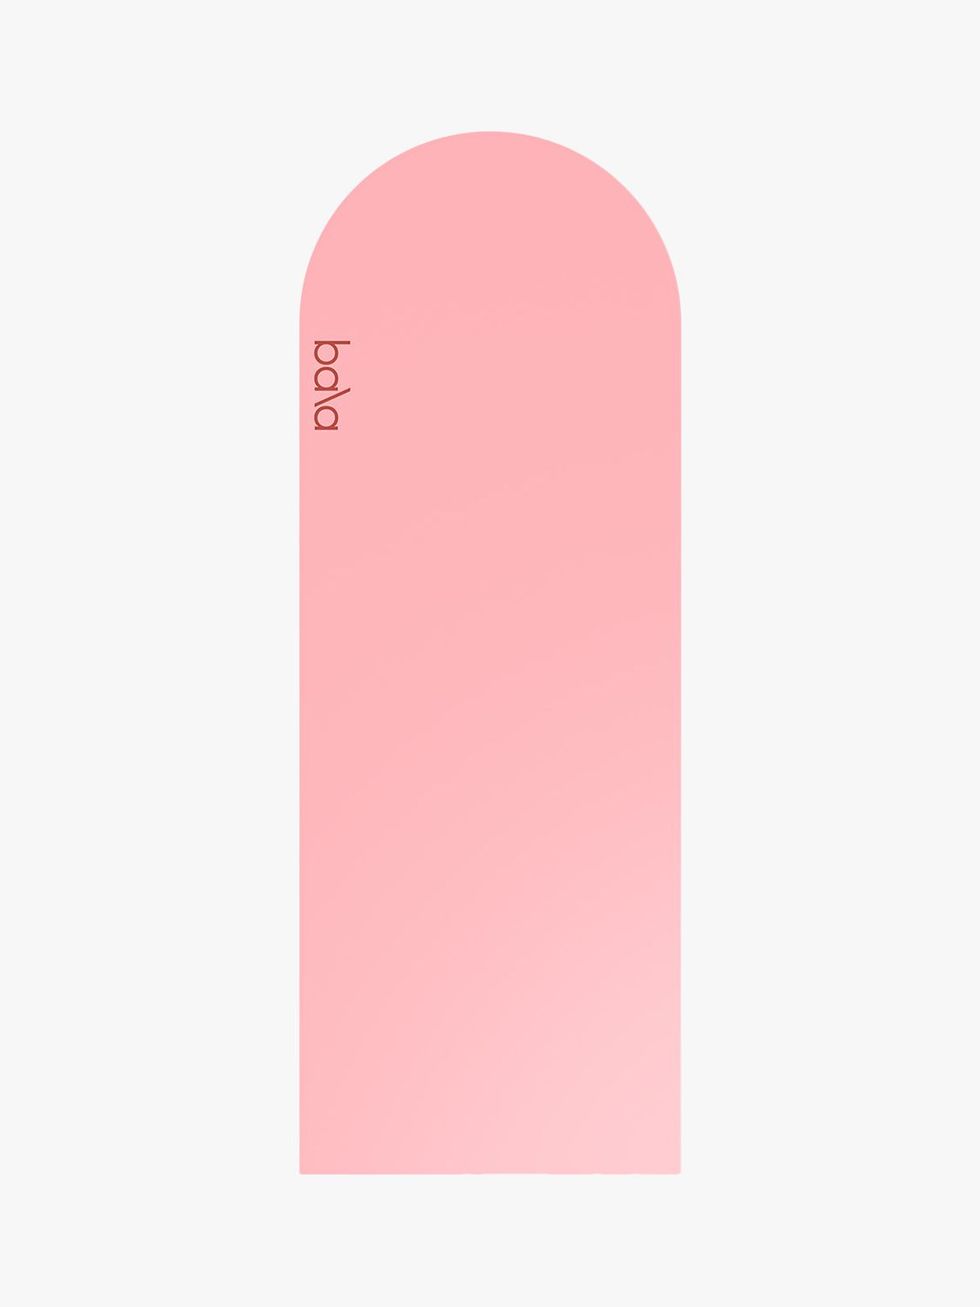 Lululemon Yoga Mat 180 x 66 cm high density fuchsia pink w/ branded carry  strap